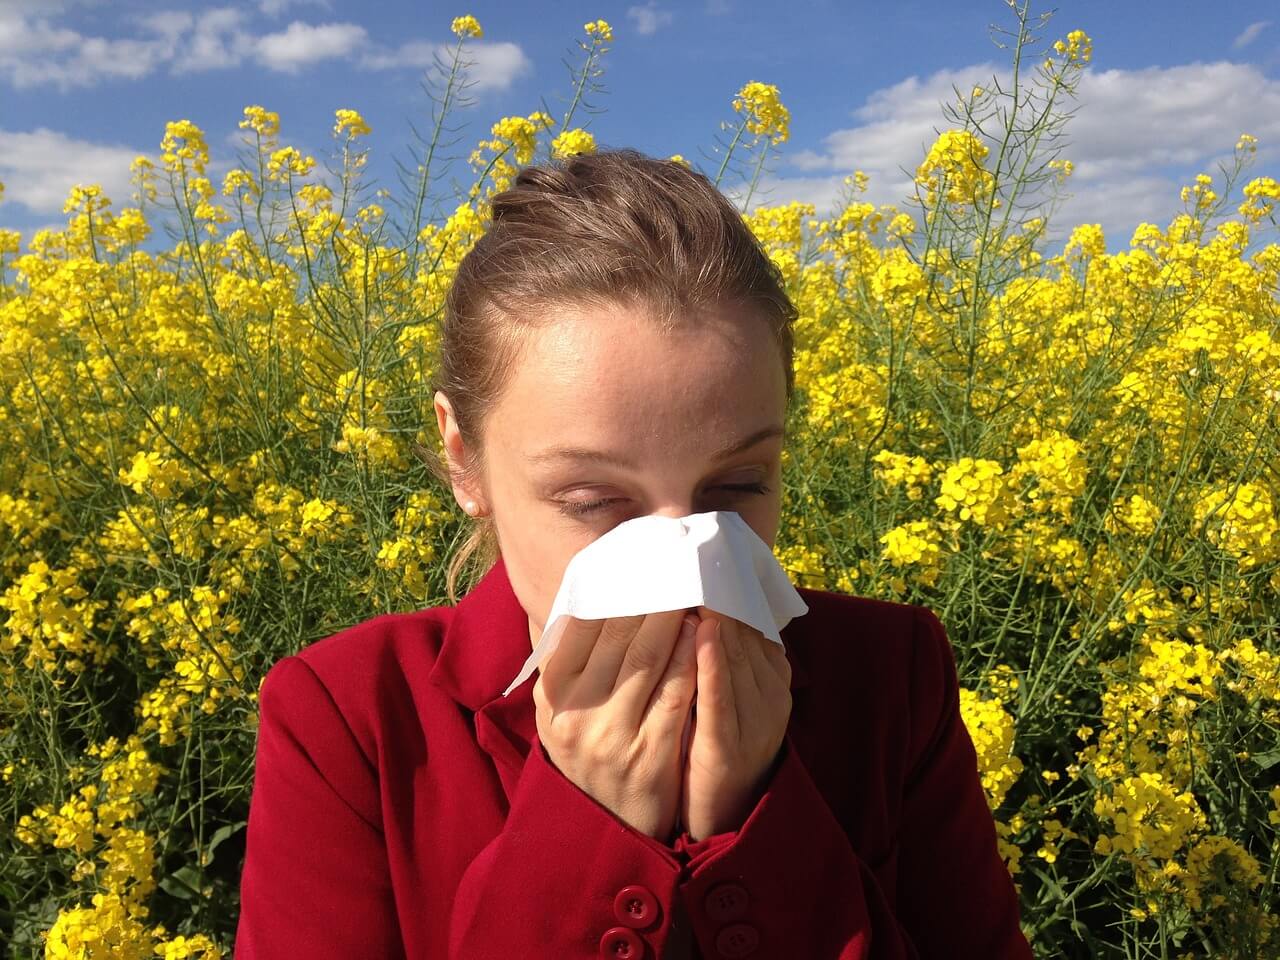 Astma, allergi eller angst?